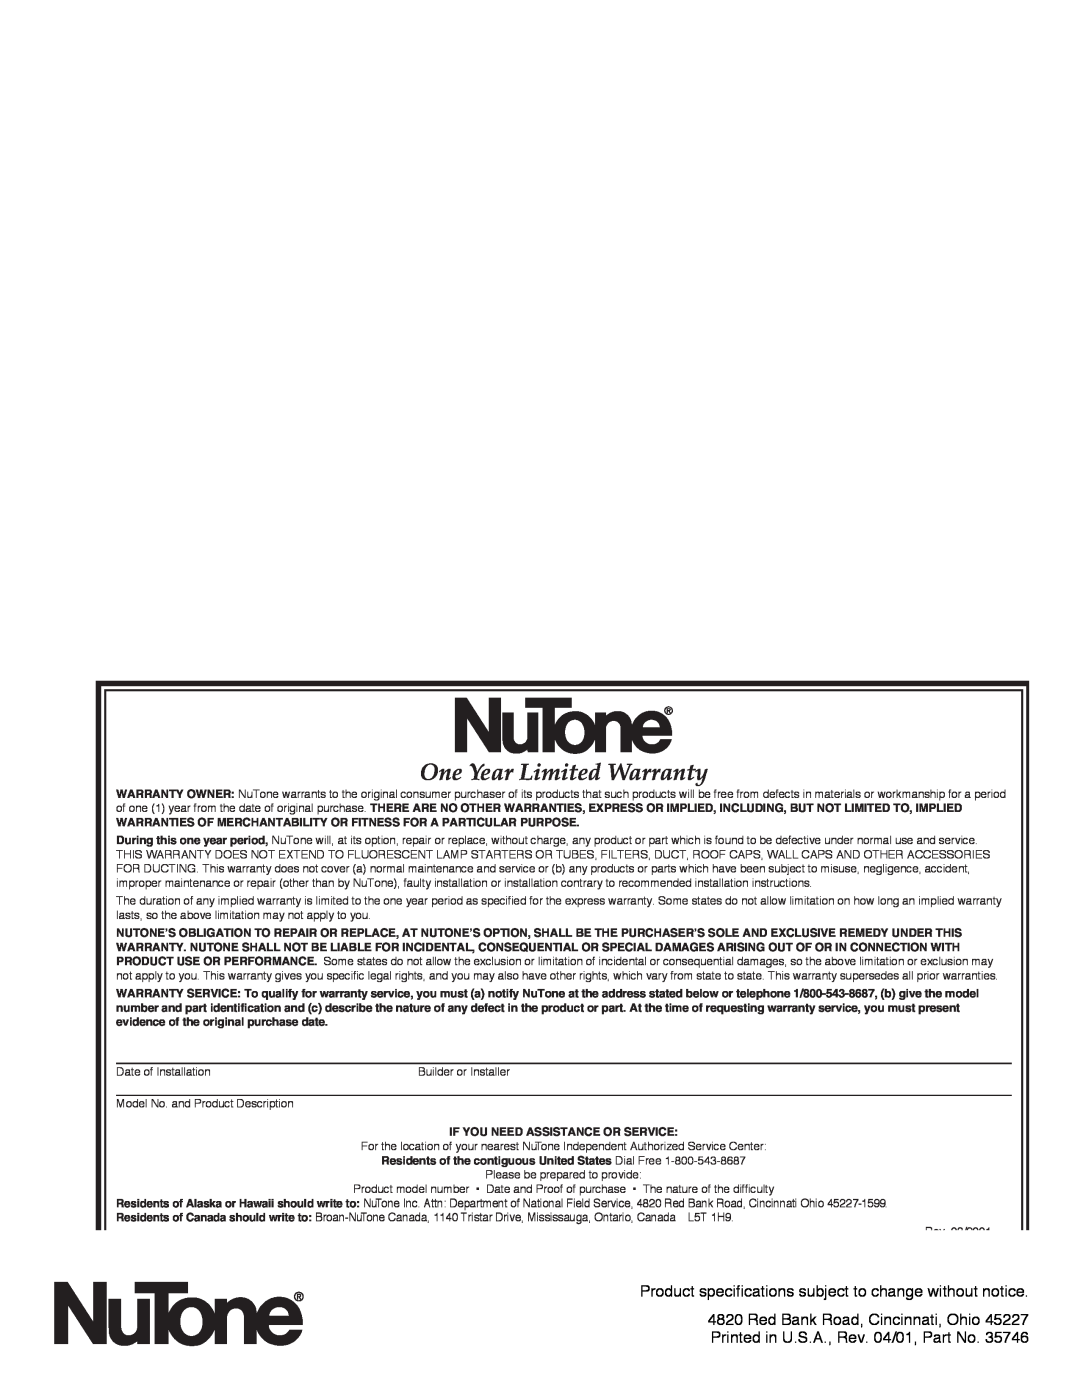 NuTone QT140L installation instructions One Year Limited Warranty, Red Bank Road, Cincinnati, Ohio 